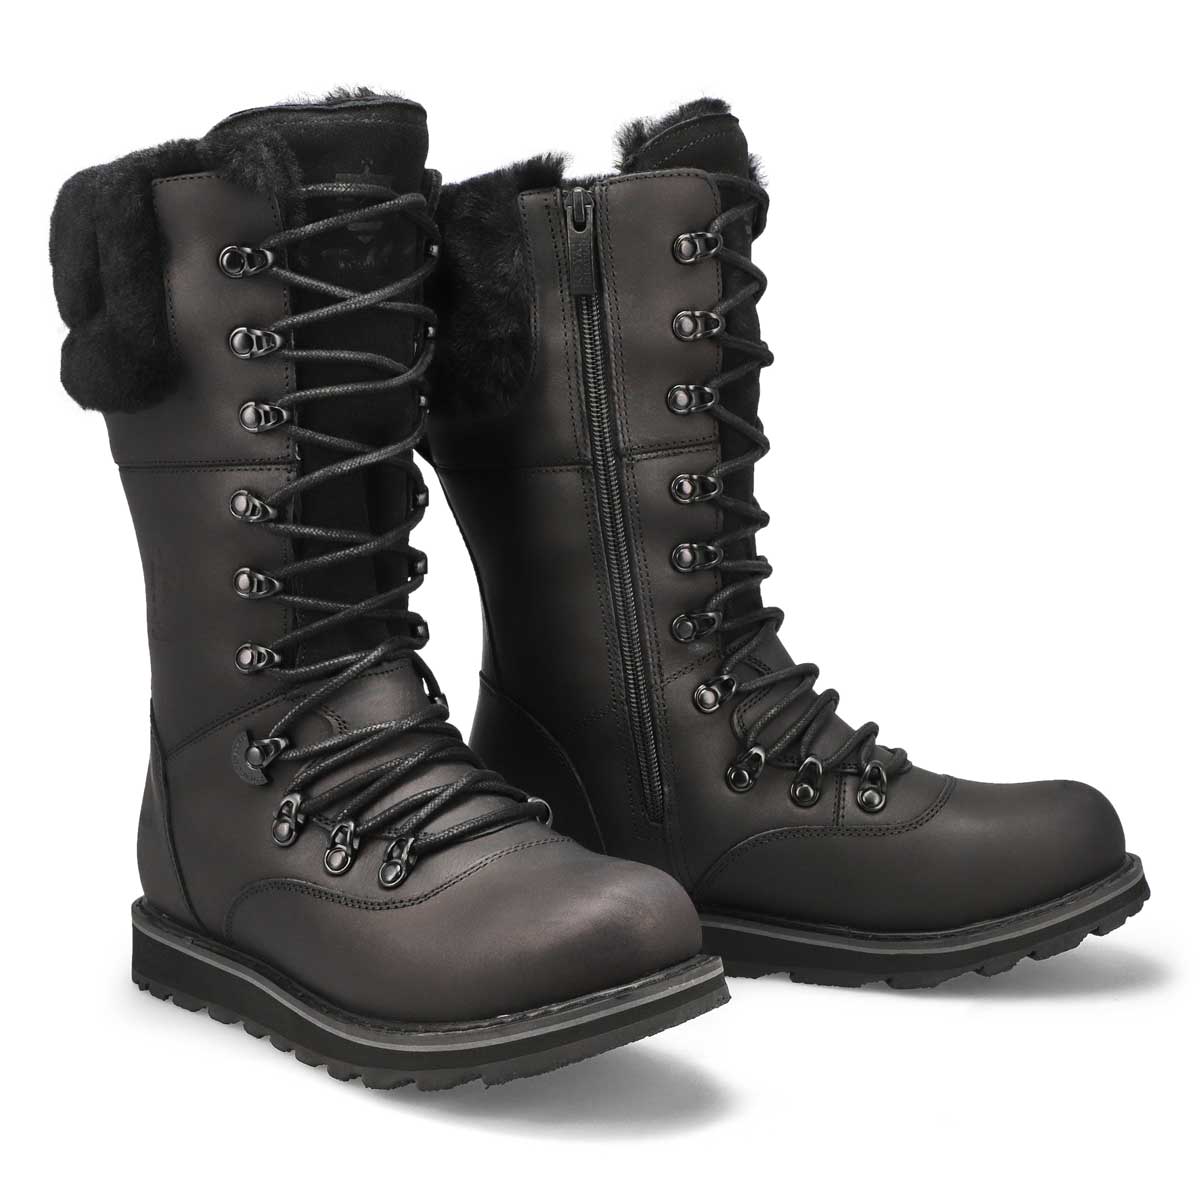 Women's Castlegar Waterproof Winter Boot - Black